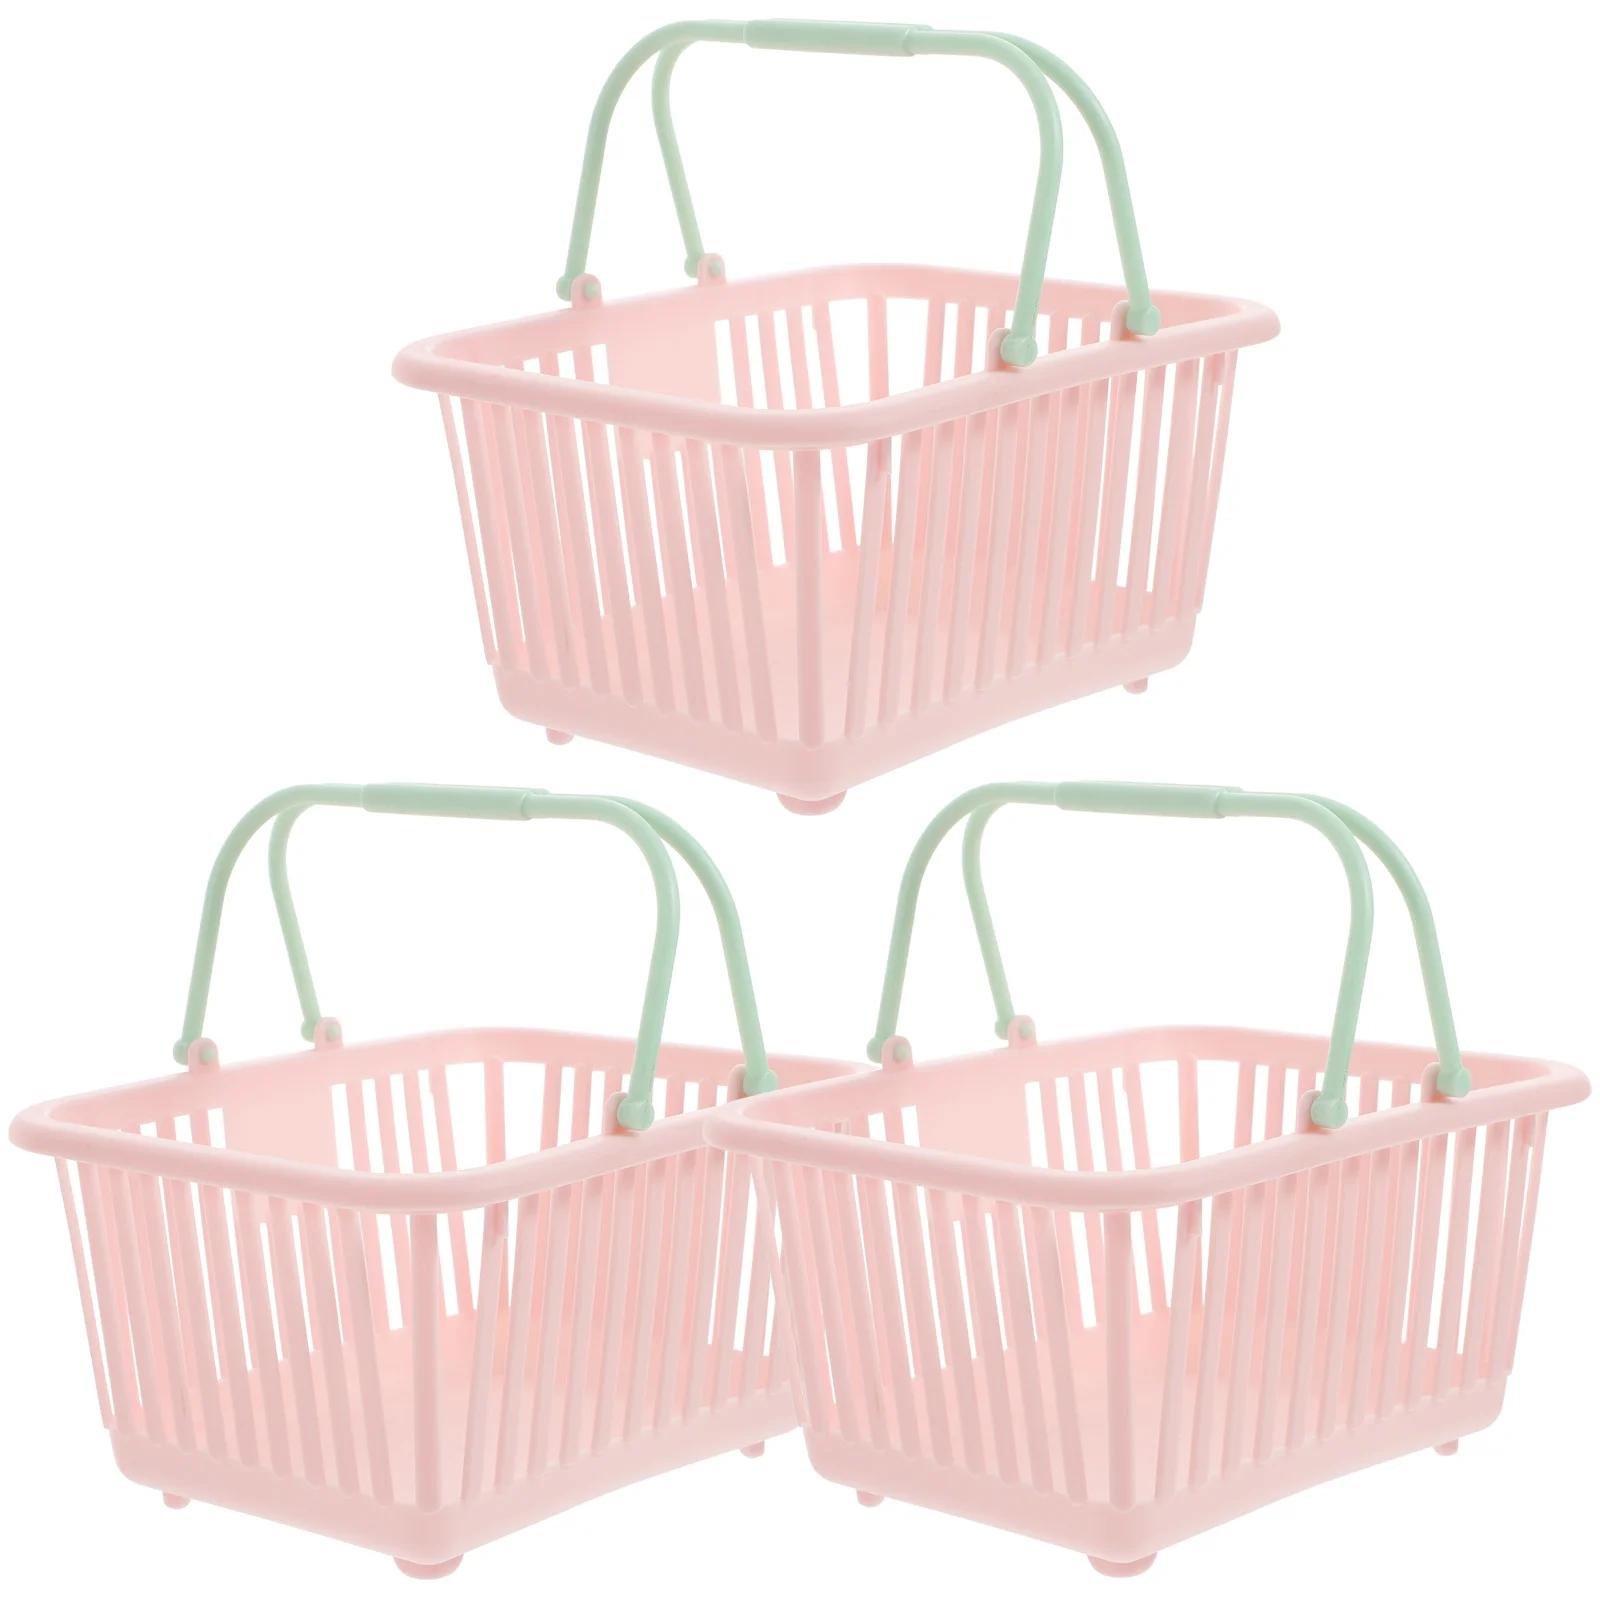 

Basket Baskets Storage Plastic Shopping Grocery Toy Classroom Mini Handles Bins Handle Kids Tote Garden Beach Retail Portable